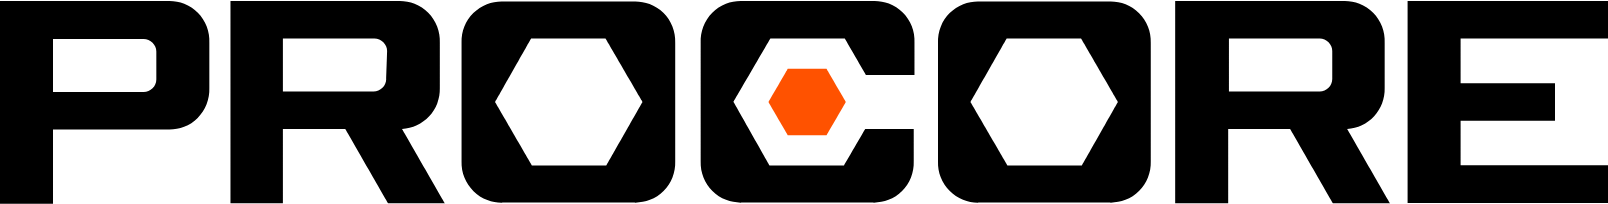 Procore logo large (transparent PNG)